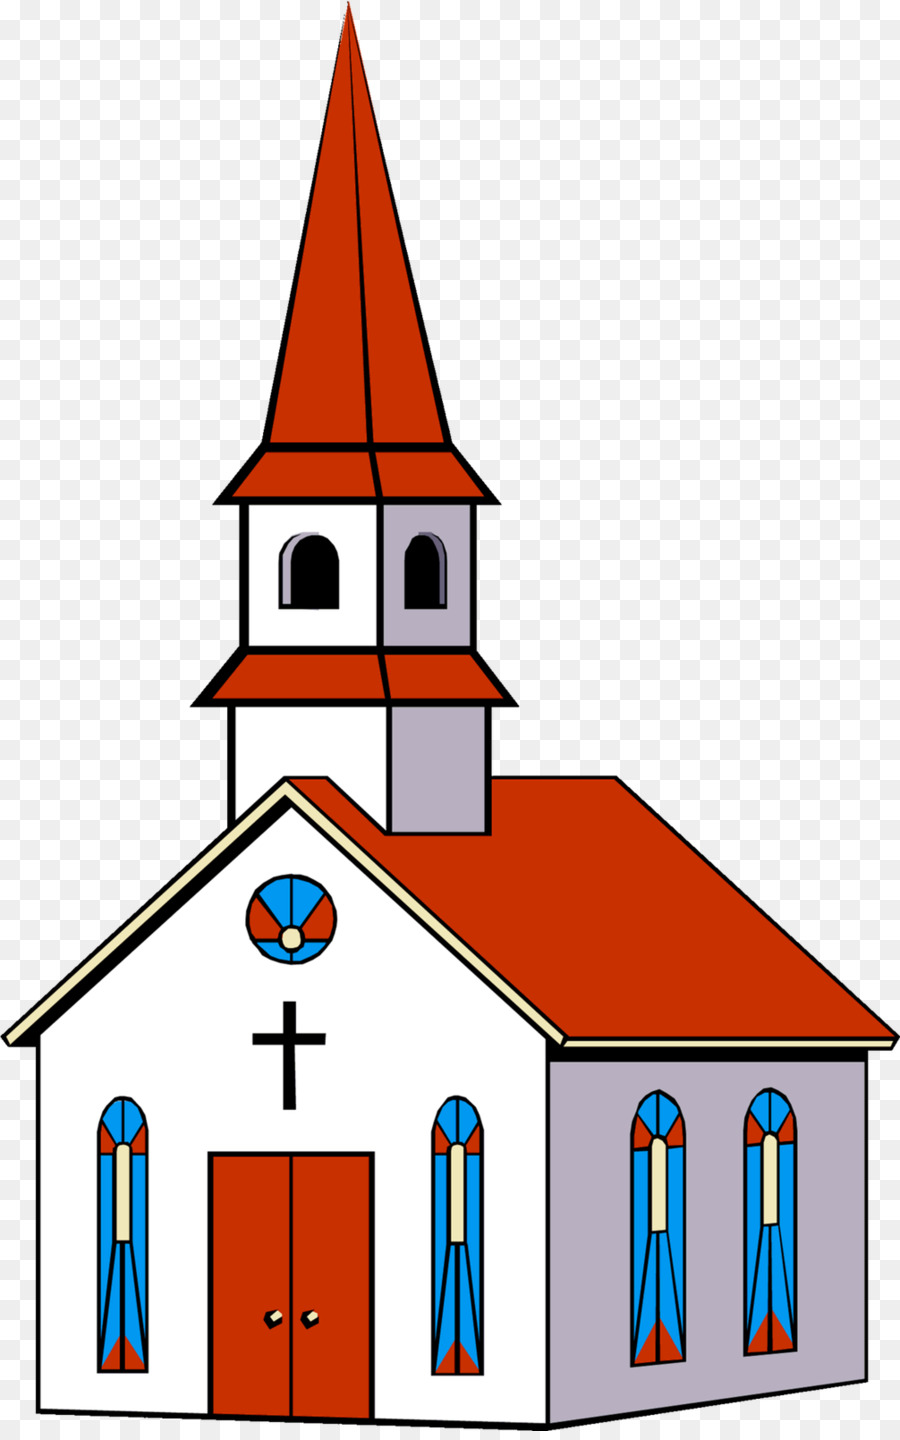 Church Clip art - Church png download - 1006*1600 - Free Transparent Church png Download.